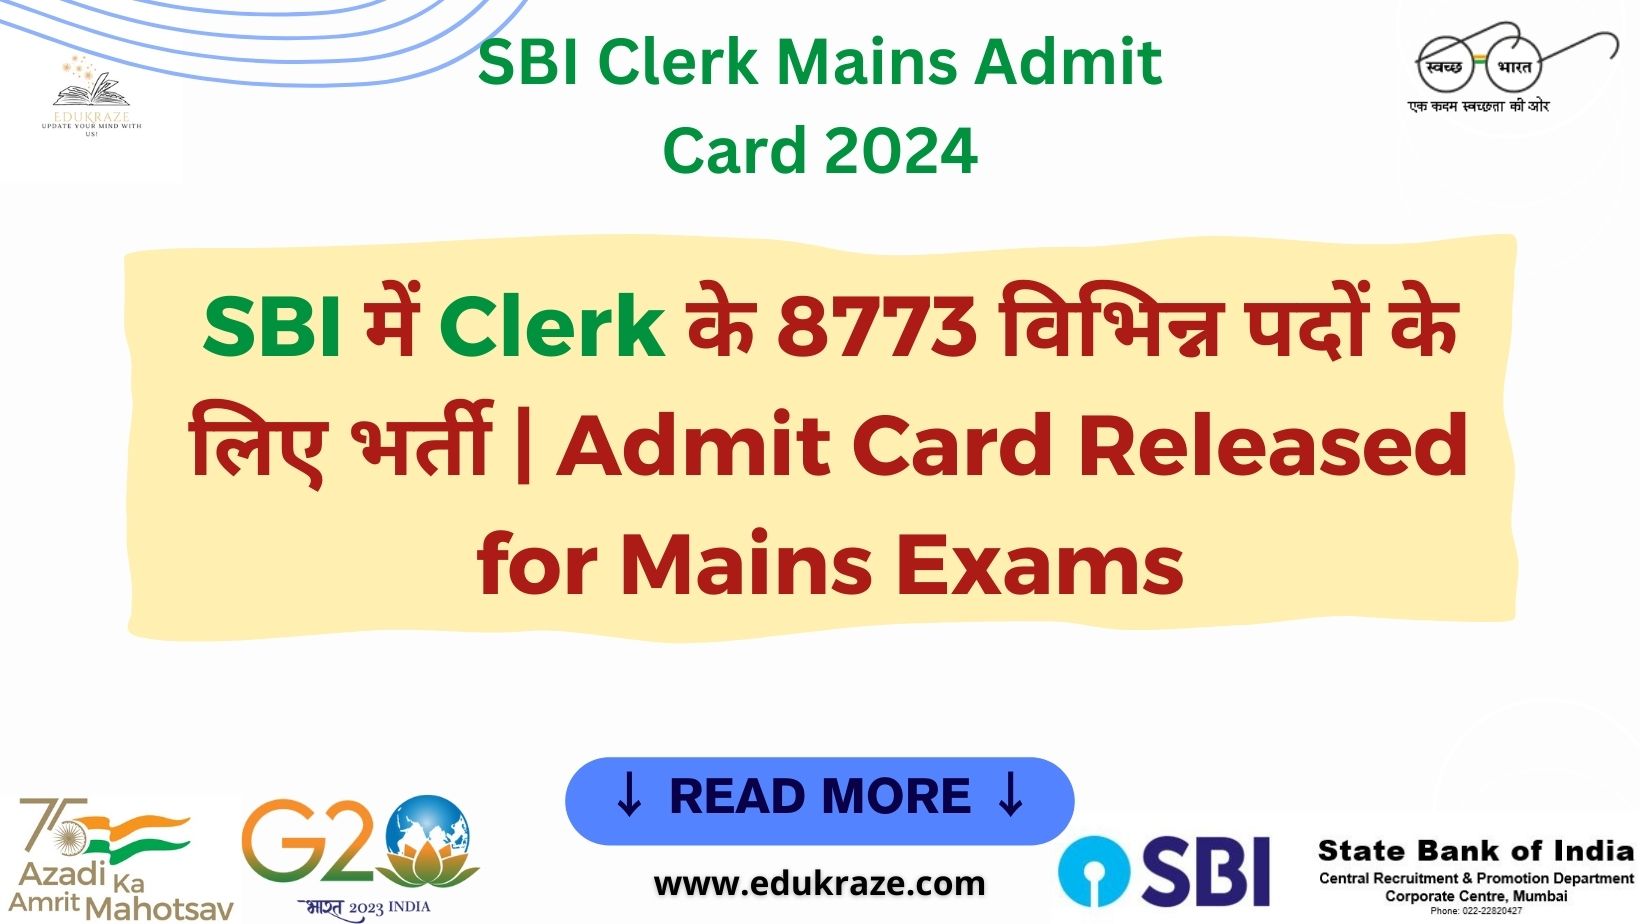 SBI Clerk Mains Admit Card 2024 Released: Download Junior Associates Hall Ticket Here